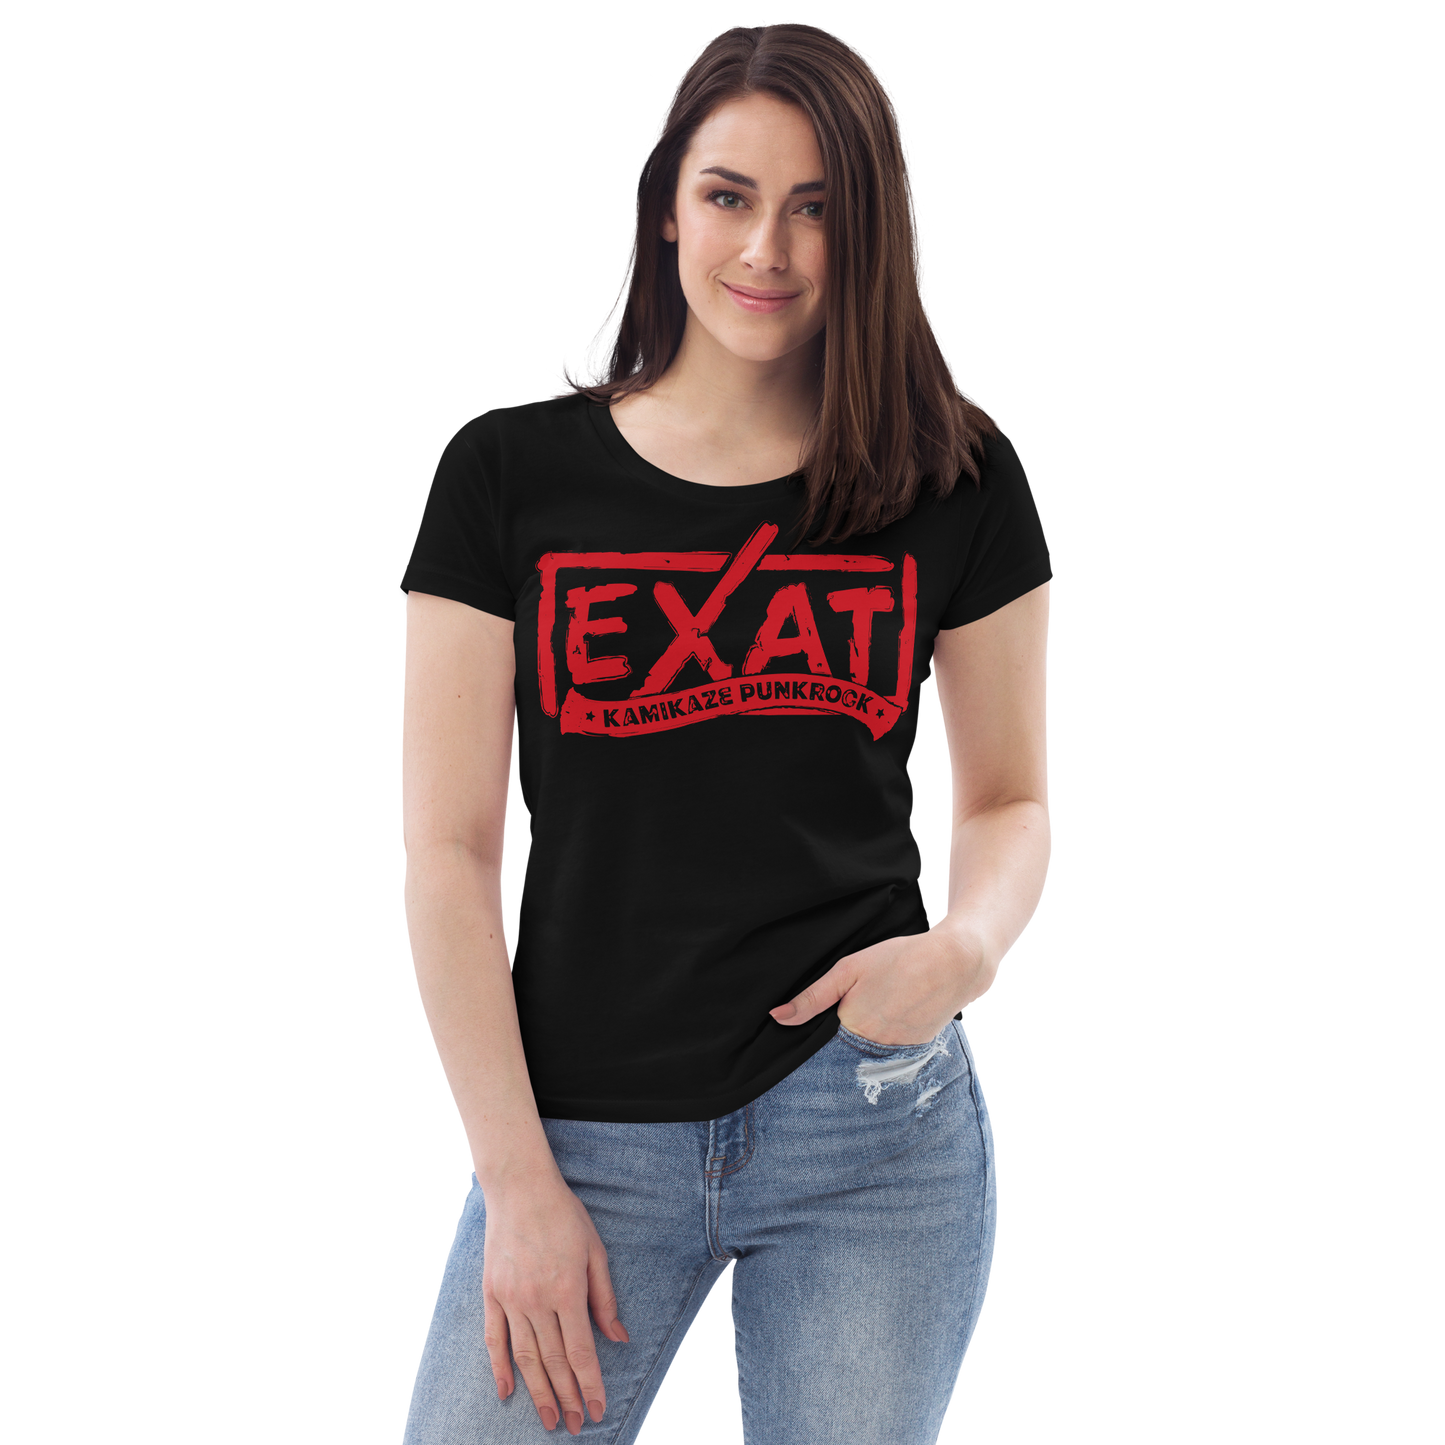 EXAT - Kamikaze Punkrock Ladies Organic Shirt